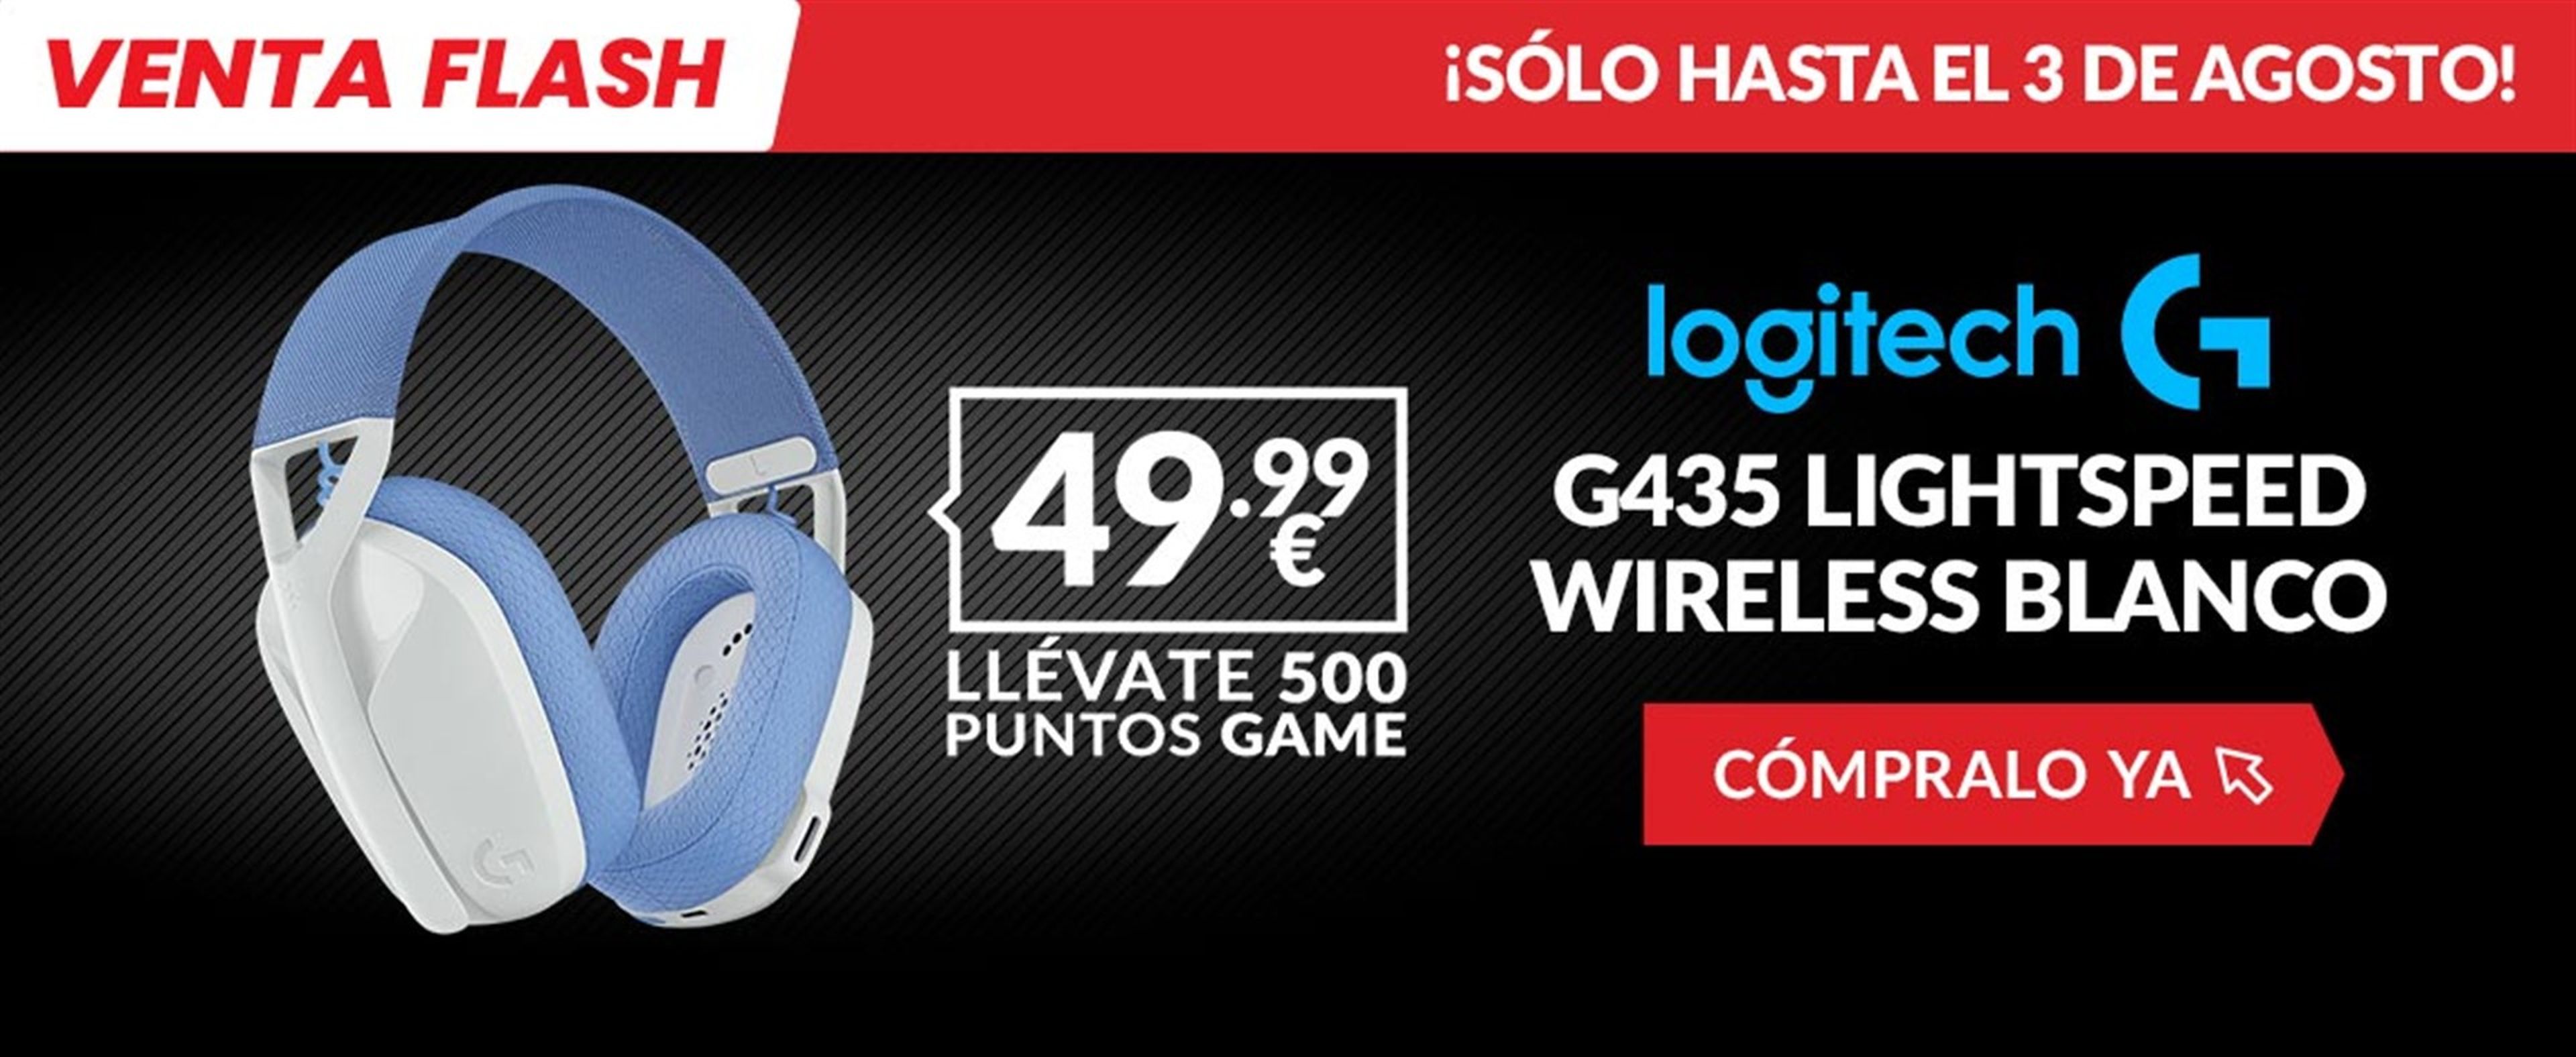 Nueva oferta flash de GAME para los Logitech G435 LightSpeed por